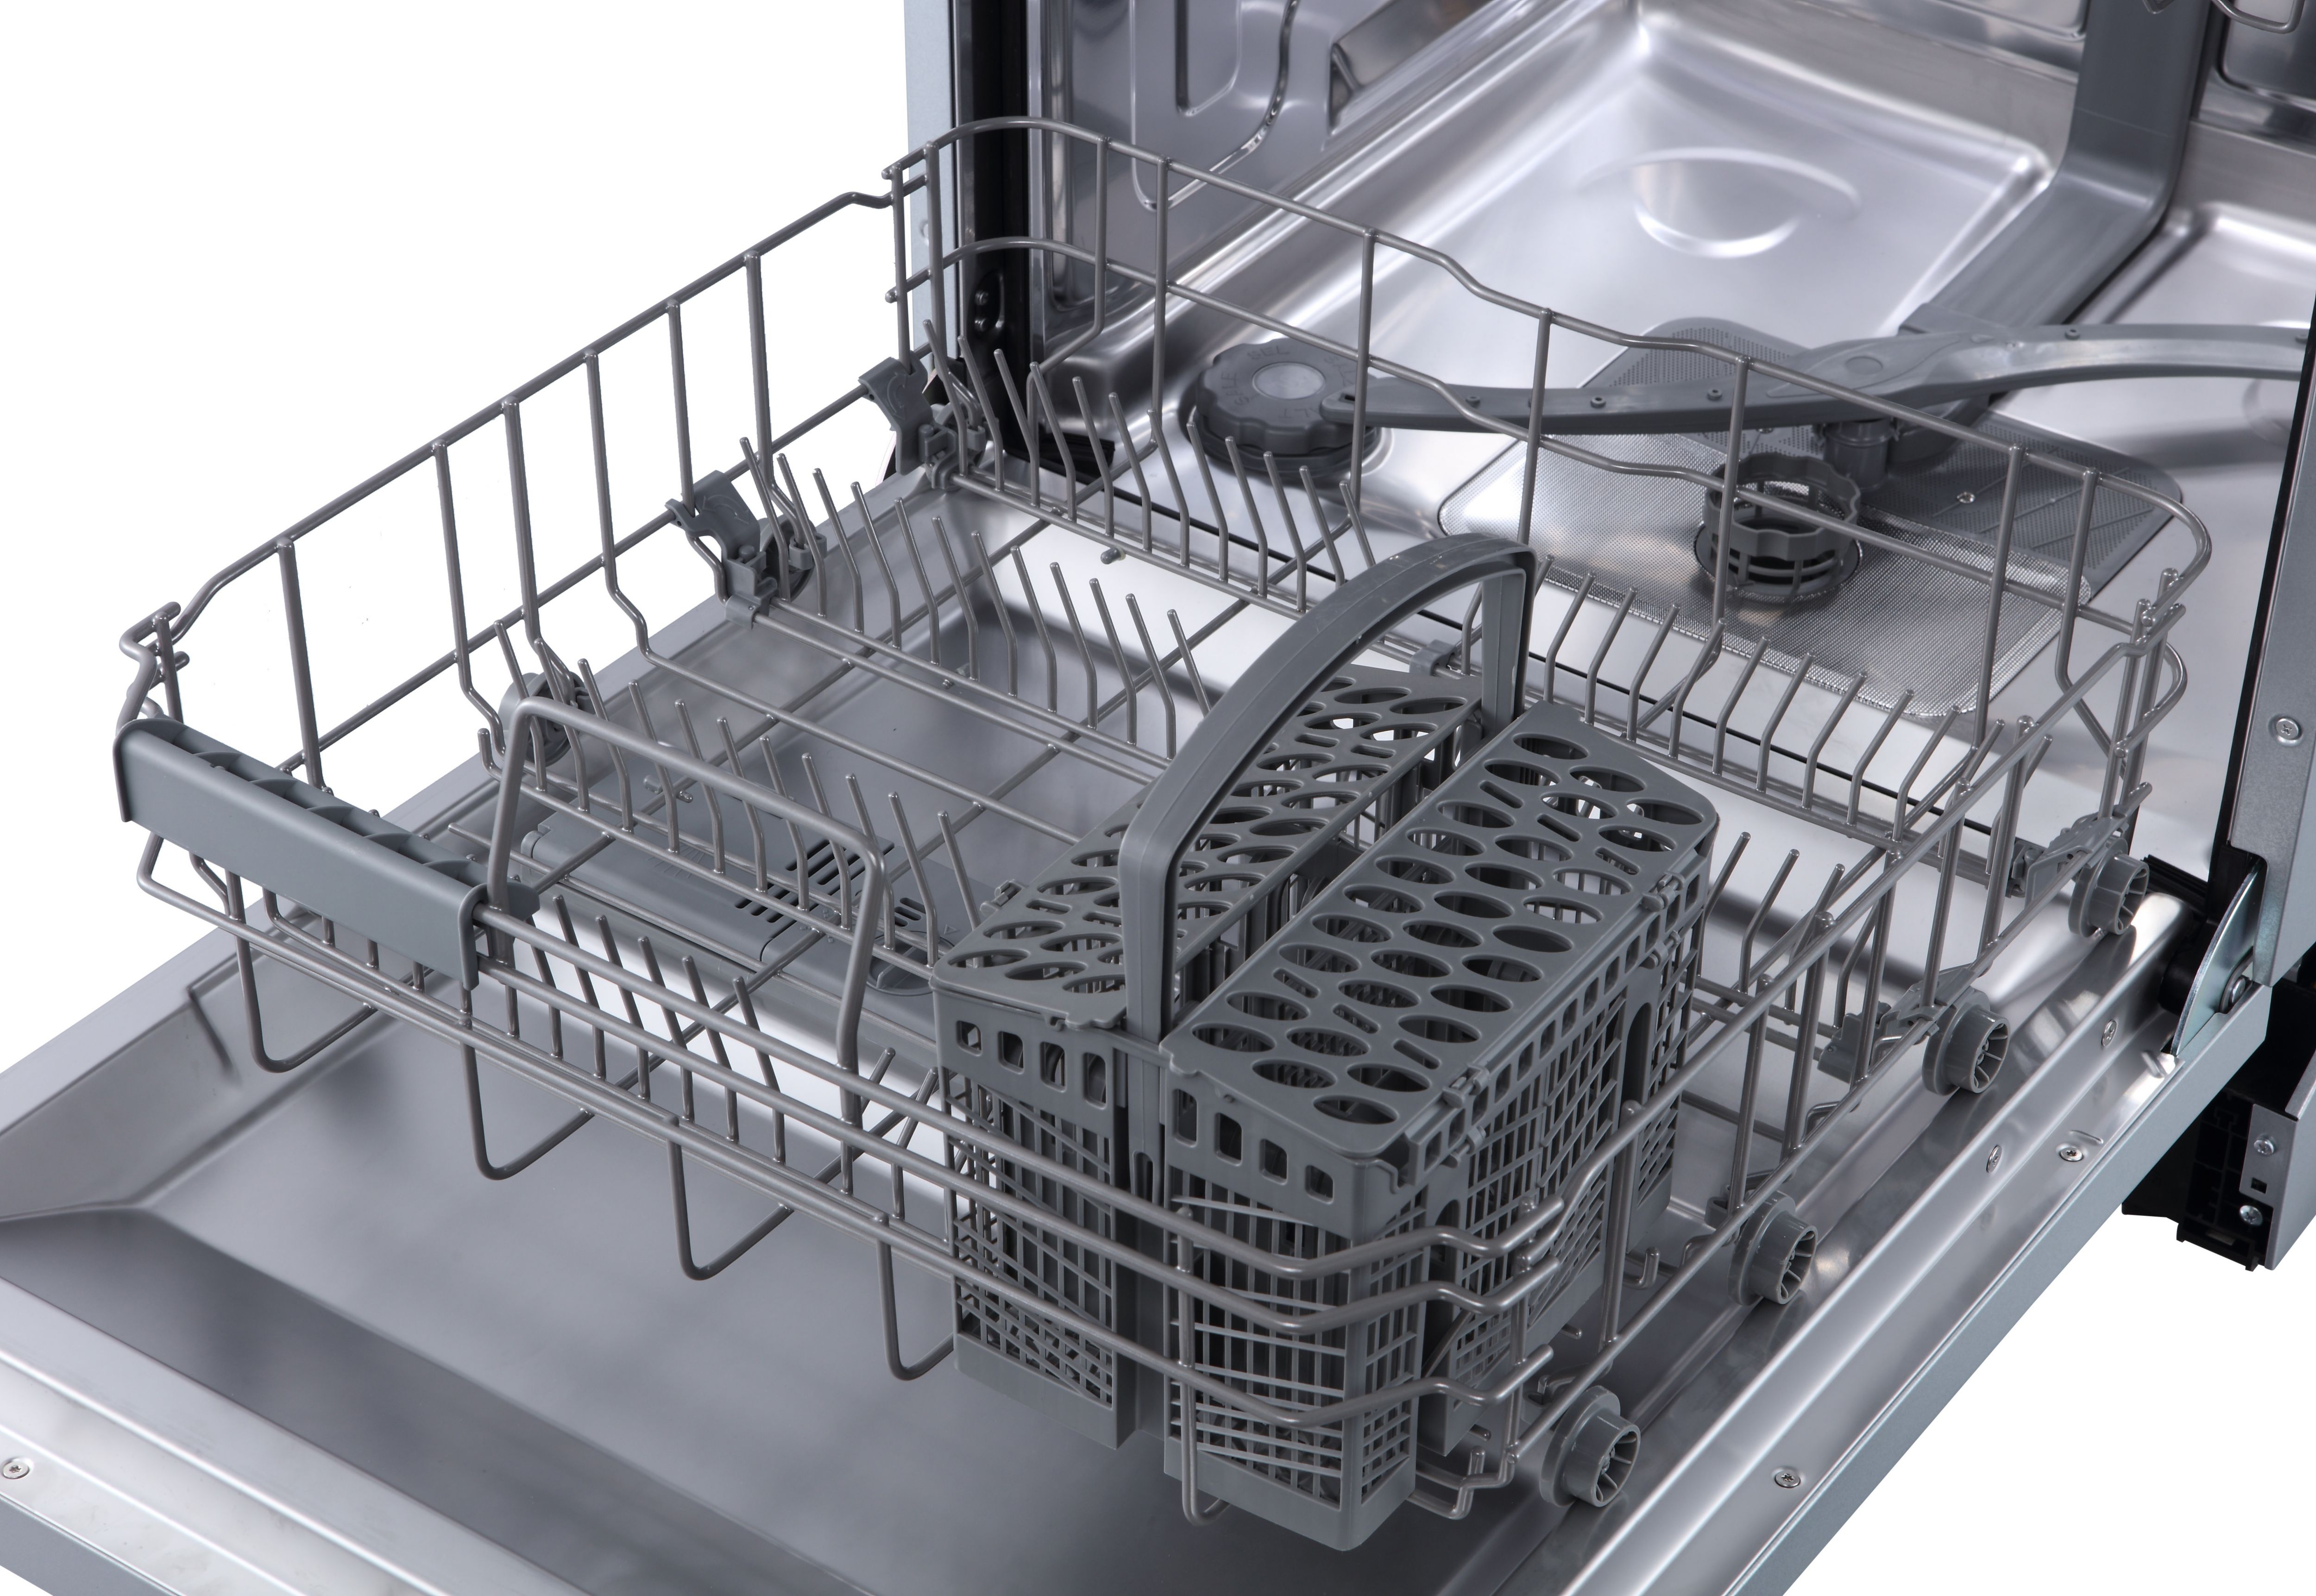 BI60DISHUK Integrated Full size Dishwasher